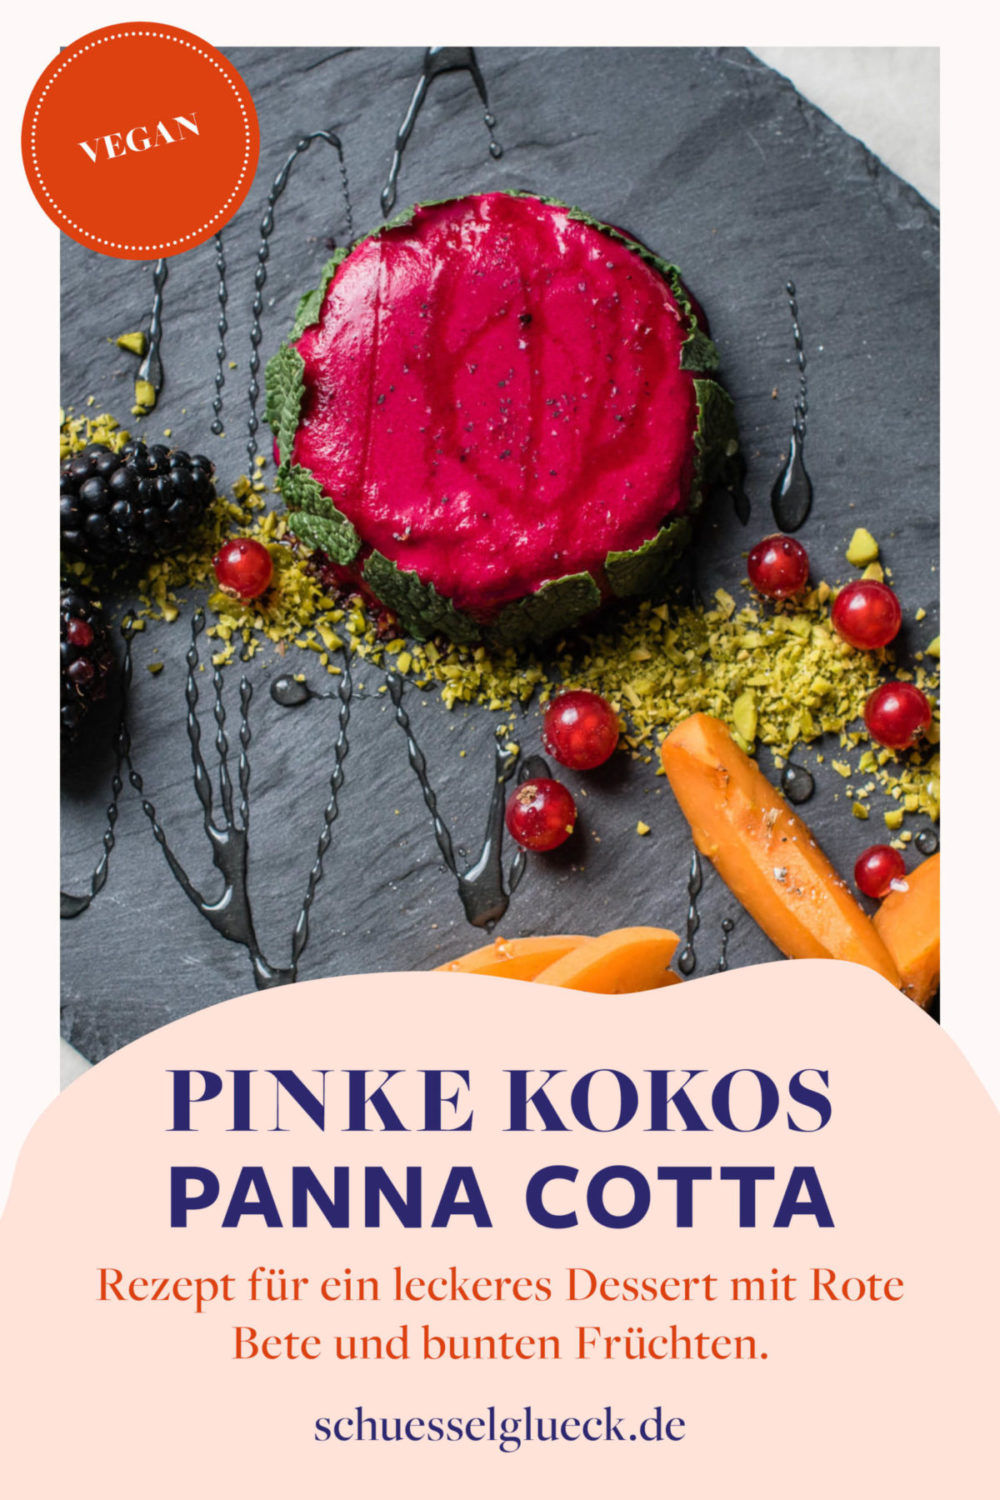 Pinke Kokos Panna Cotta mit Kardamom, Aprikosen und Beeren